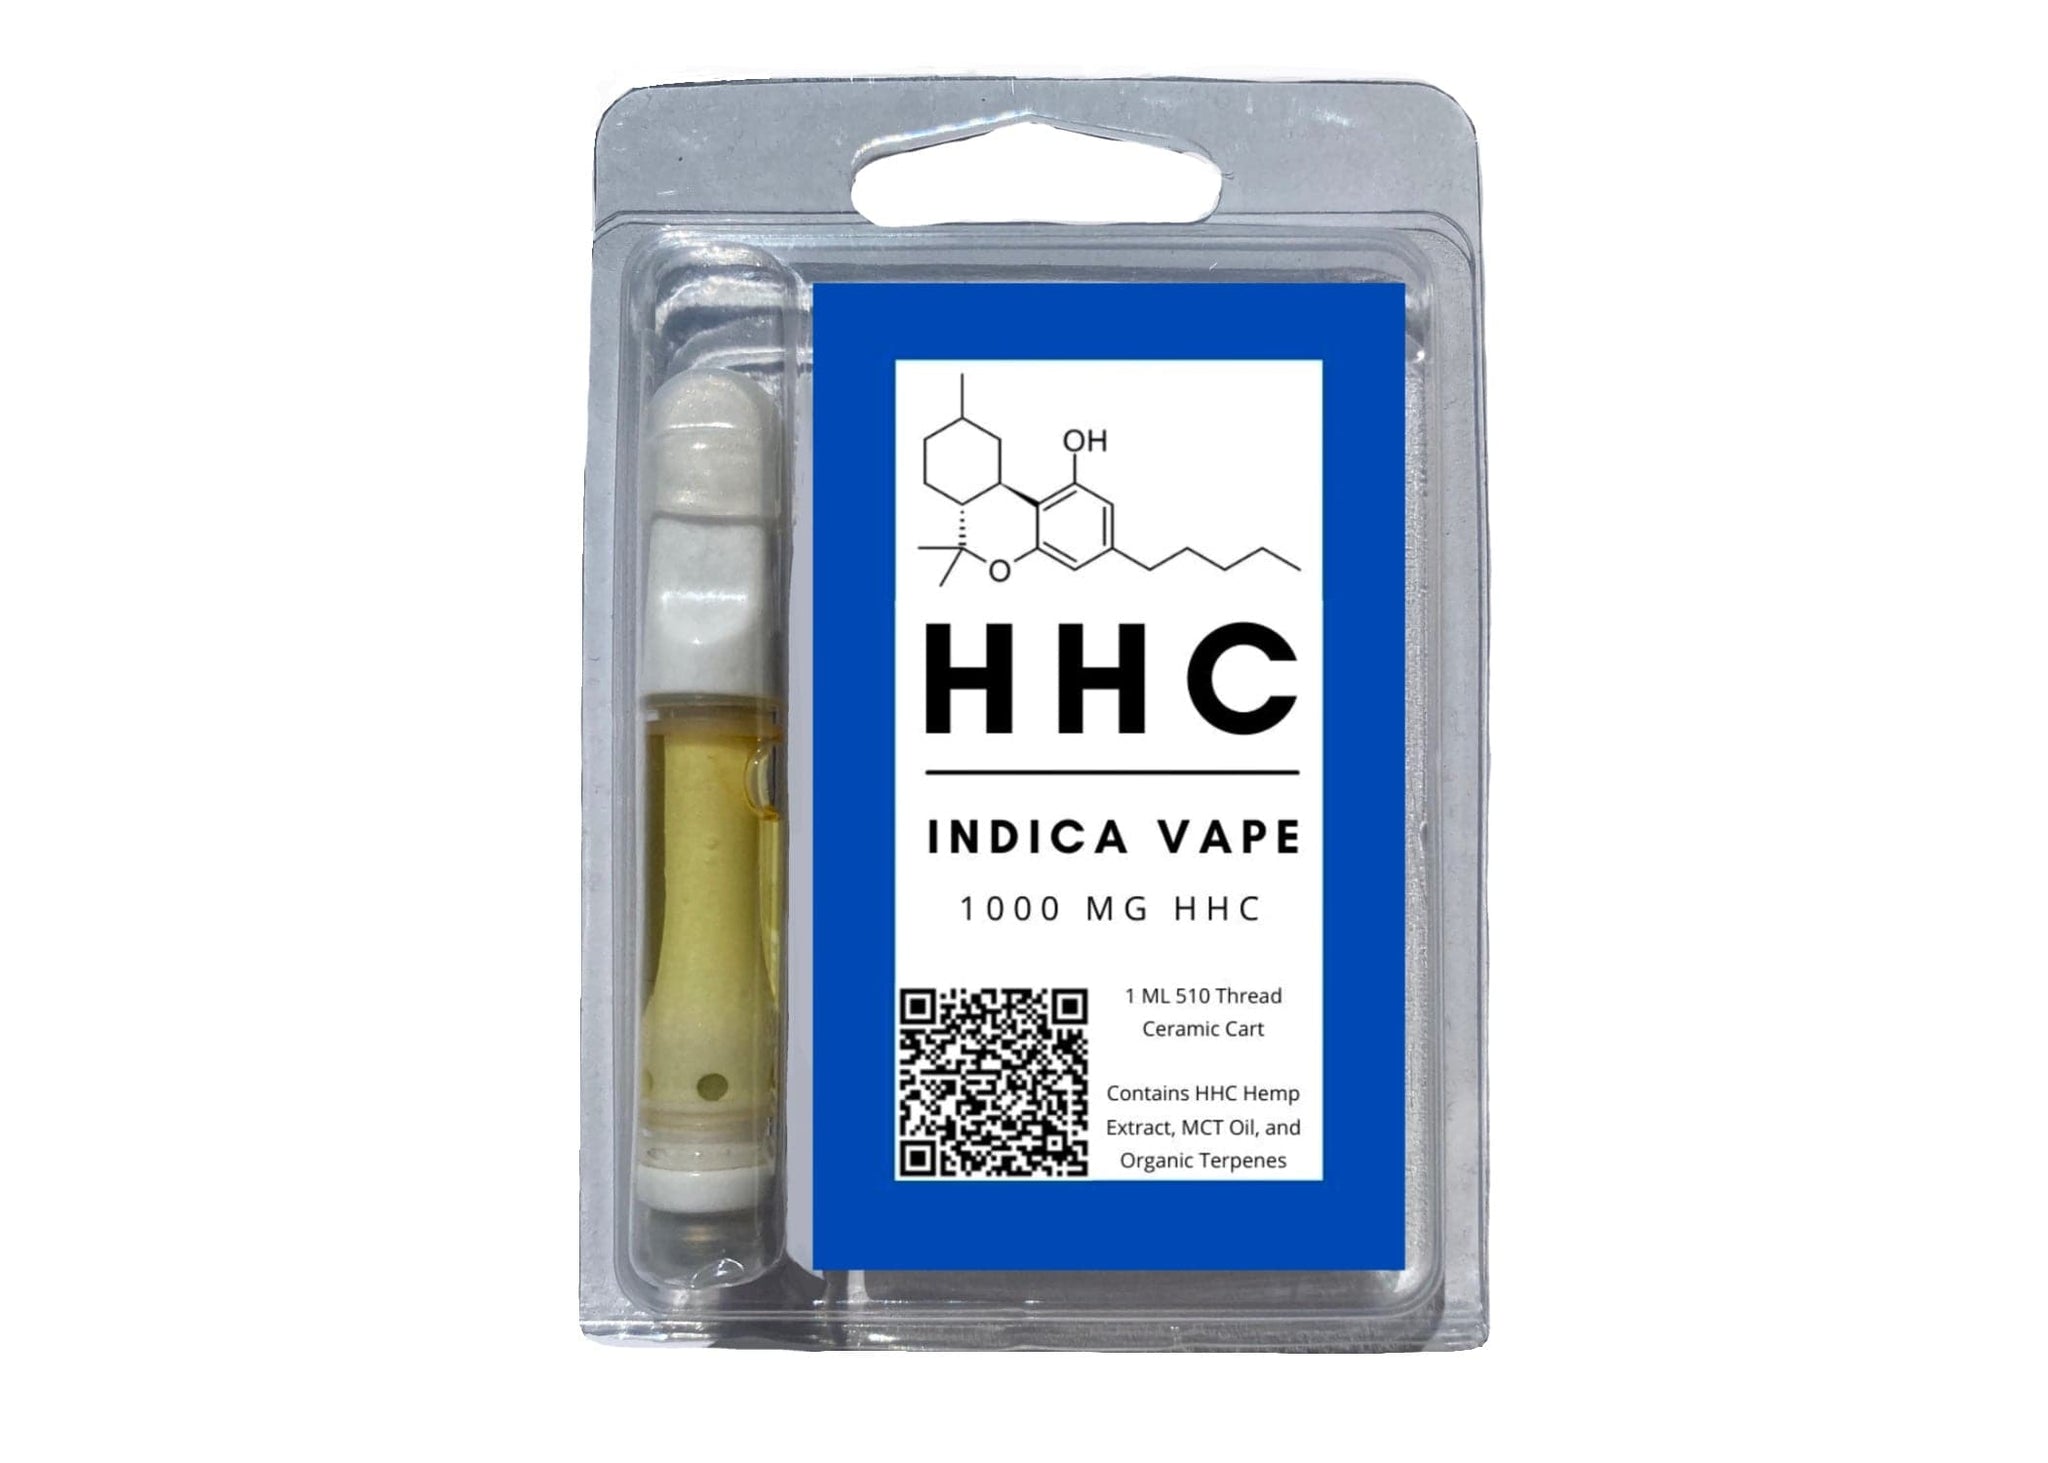 HHC Vape Cartridge – 1000 MG